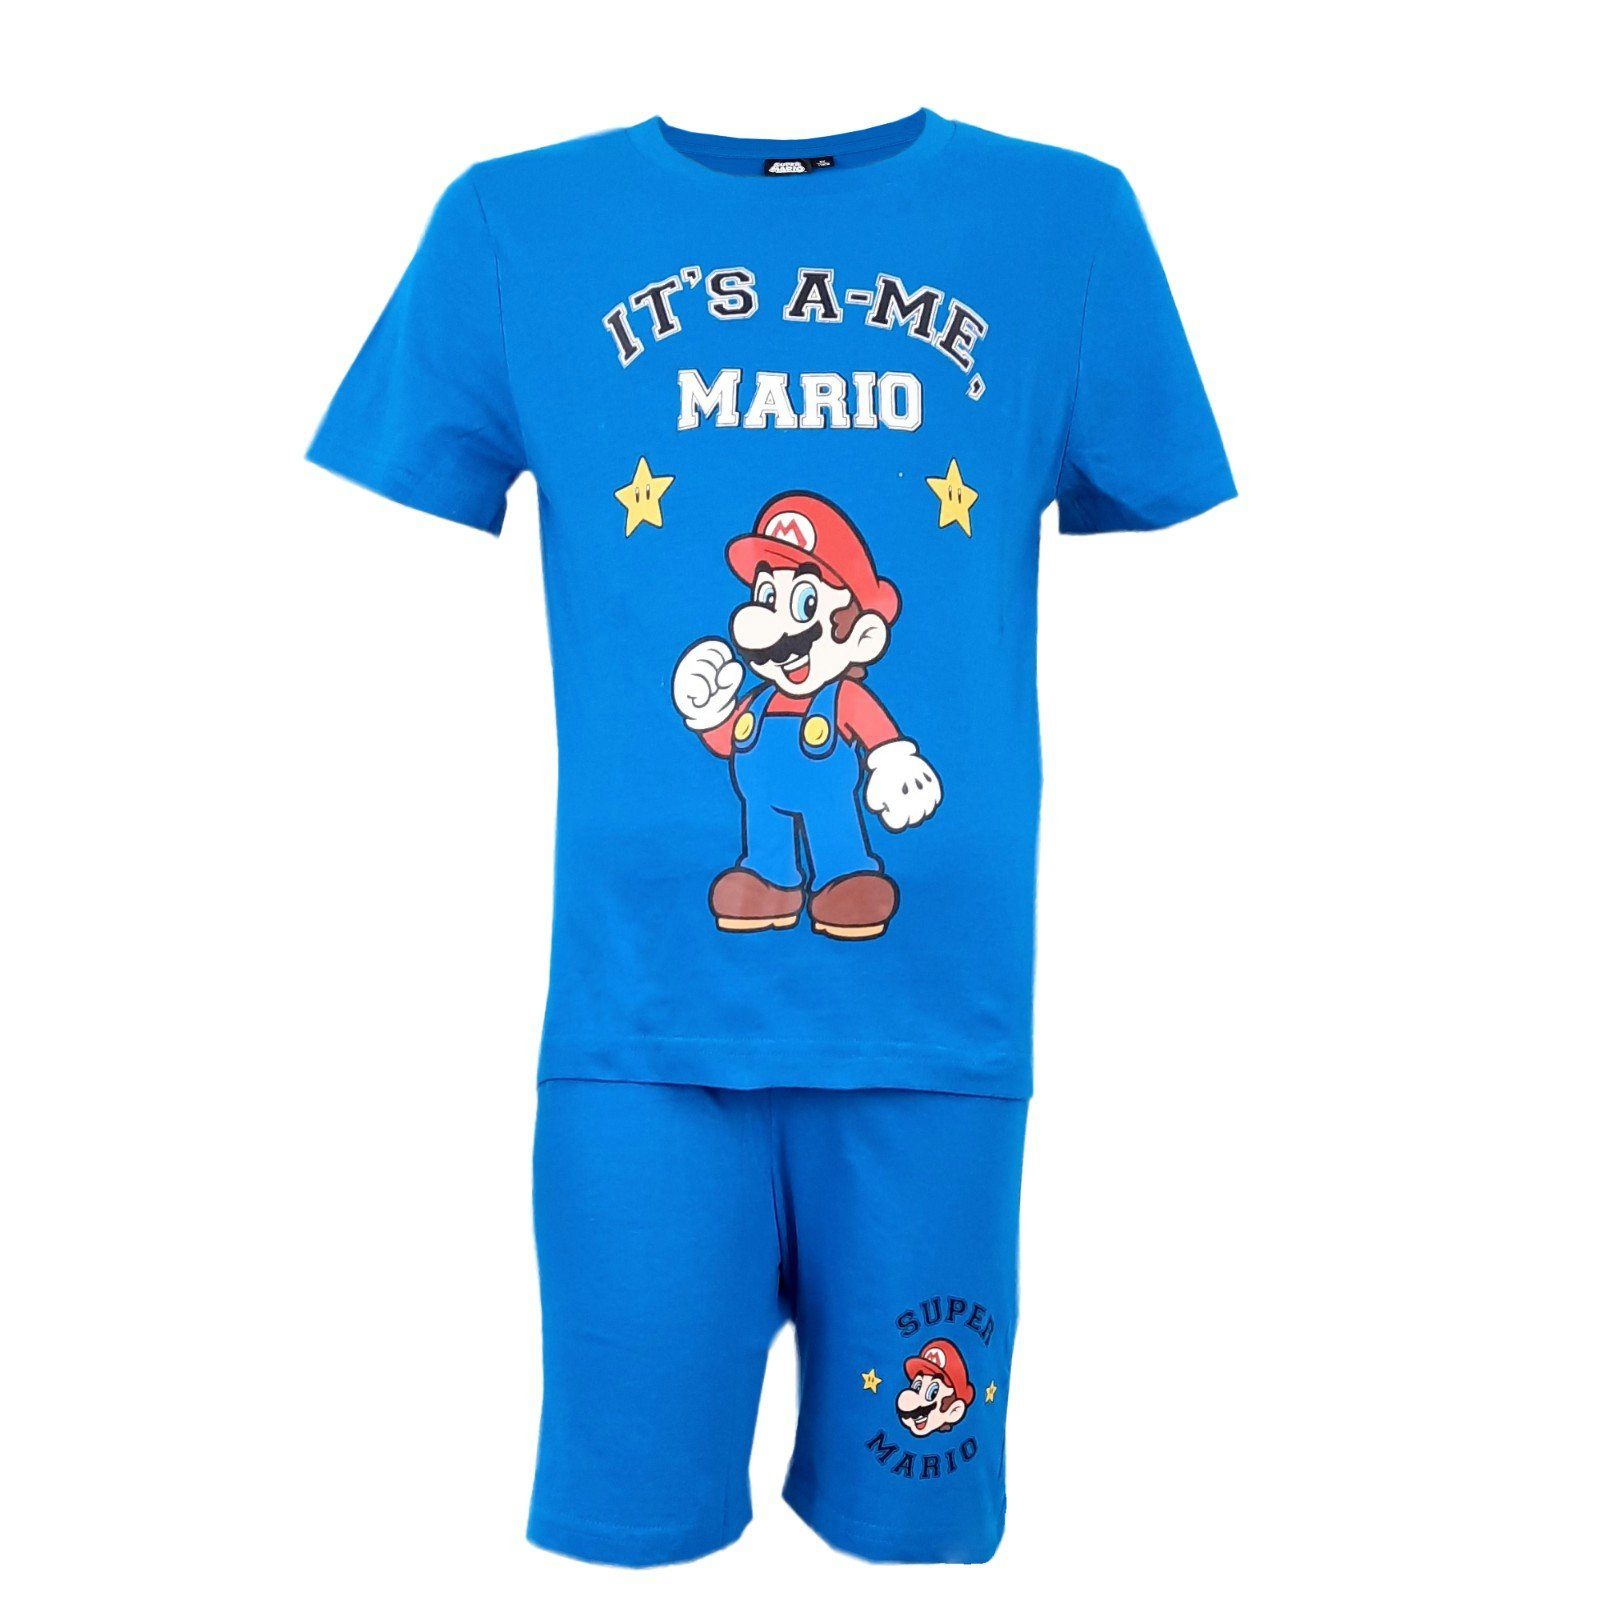 Super Mario Pyjama Super Mario 2-teiliger Kinder Jungen Pyjama Gr. 104, 116, 100% Baumwolle